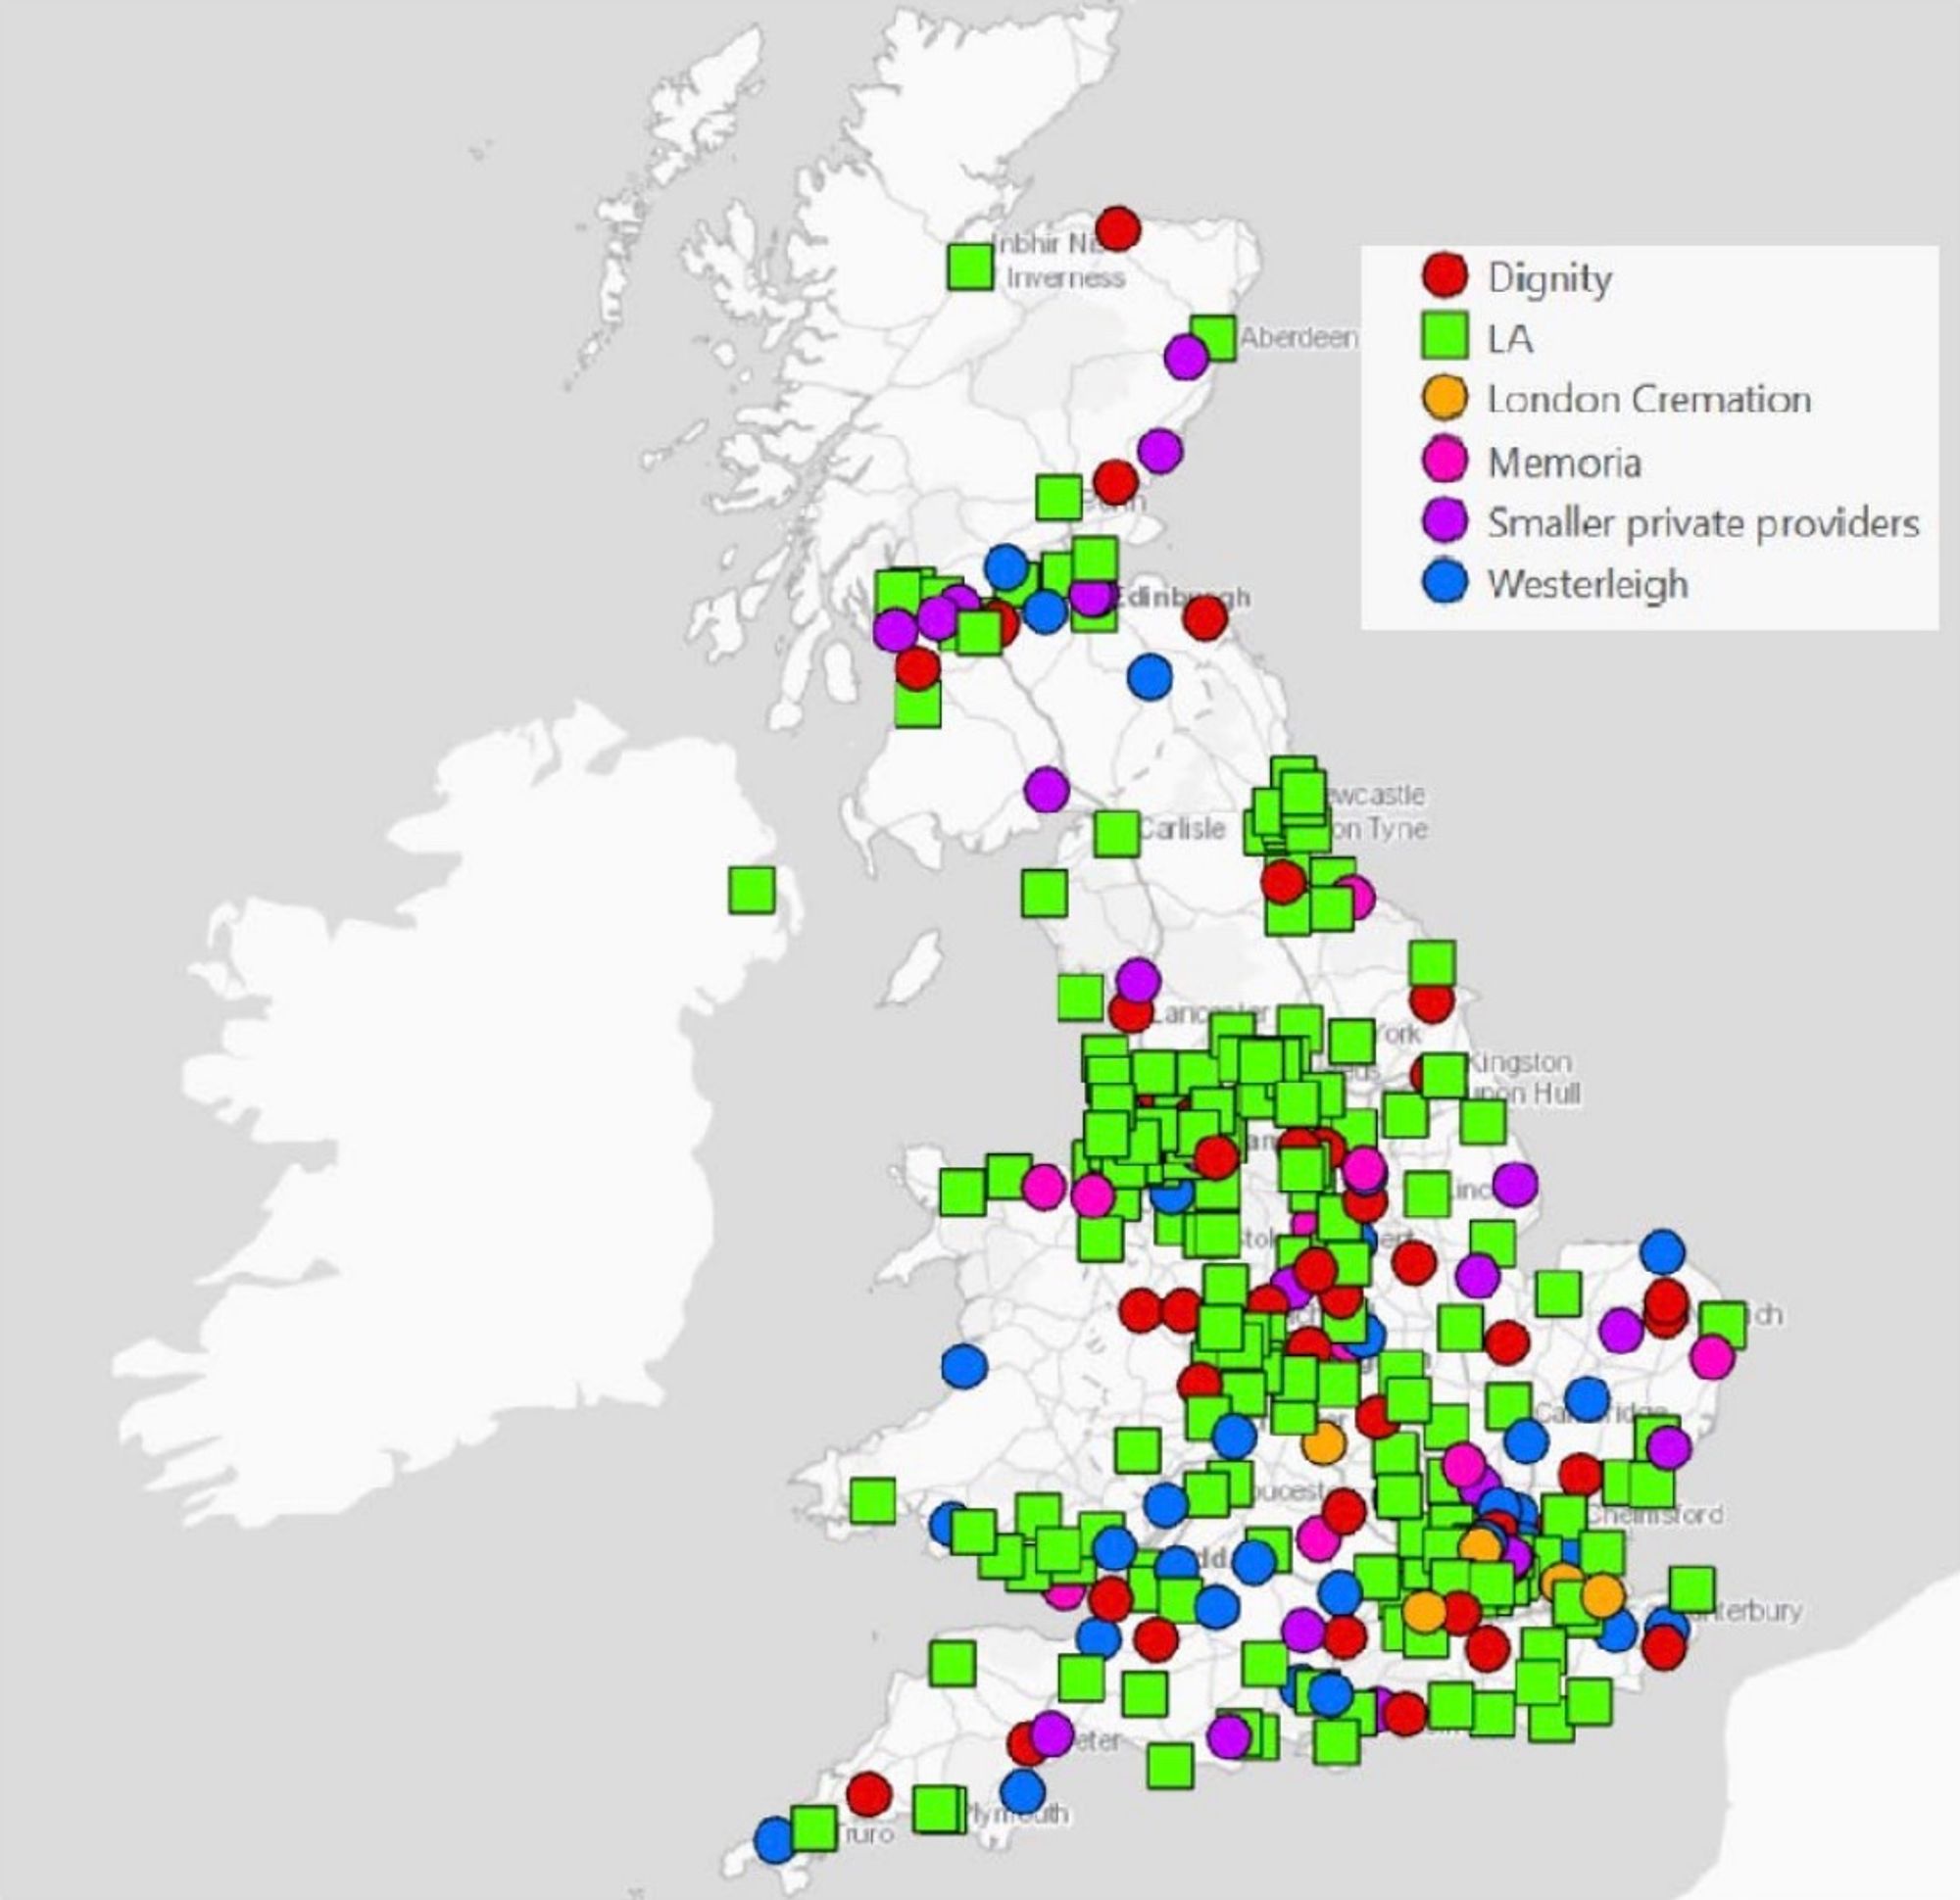 CMA analysis of ICCM data: Map of crematoria in the UK